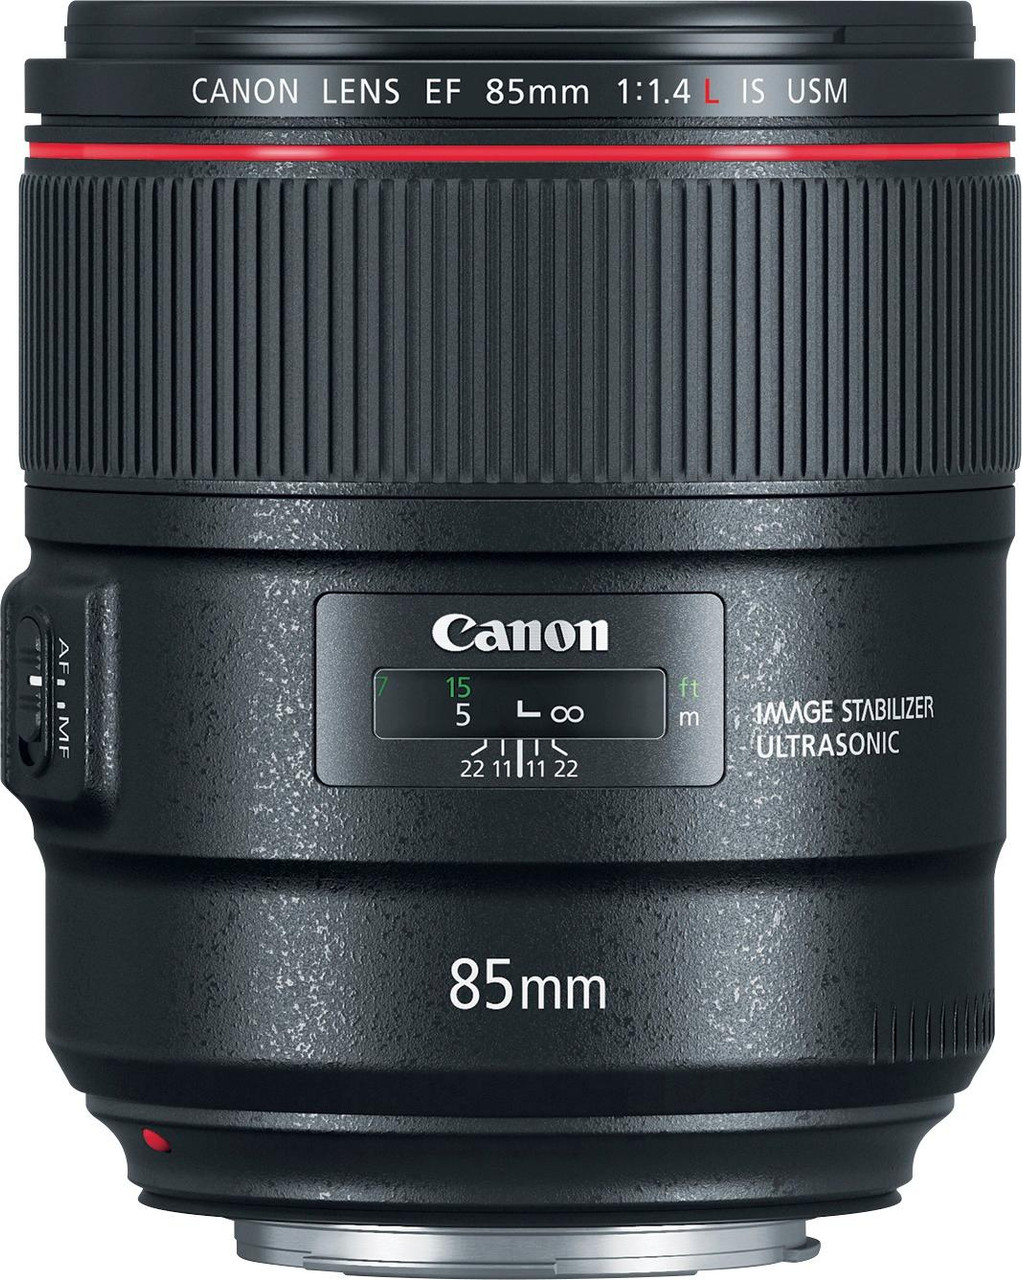 Canon - EF 85mm f/1.4L IS USM Telephoto Lens for Canon DSLRs - Black